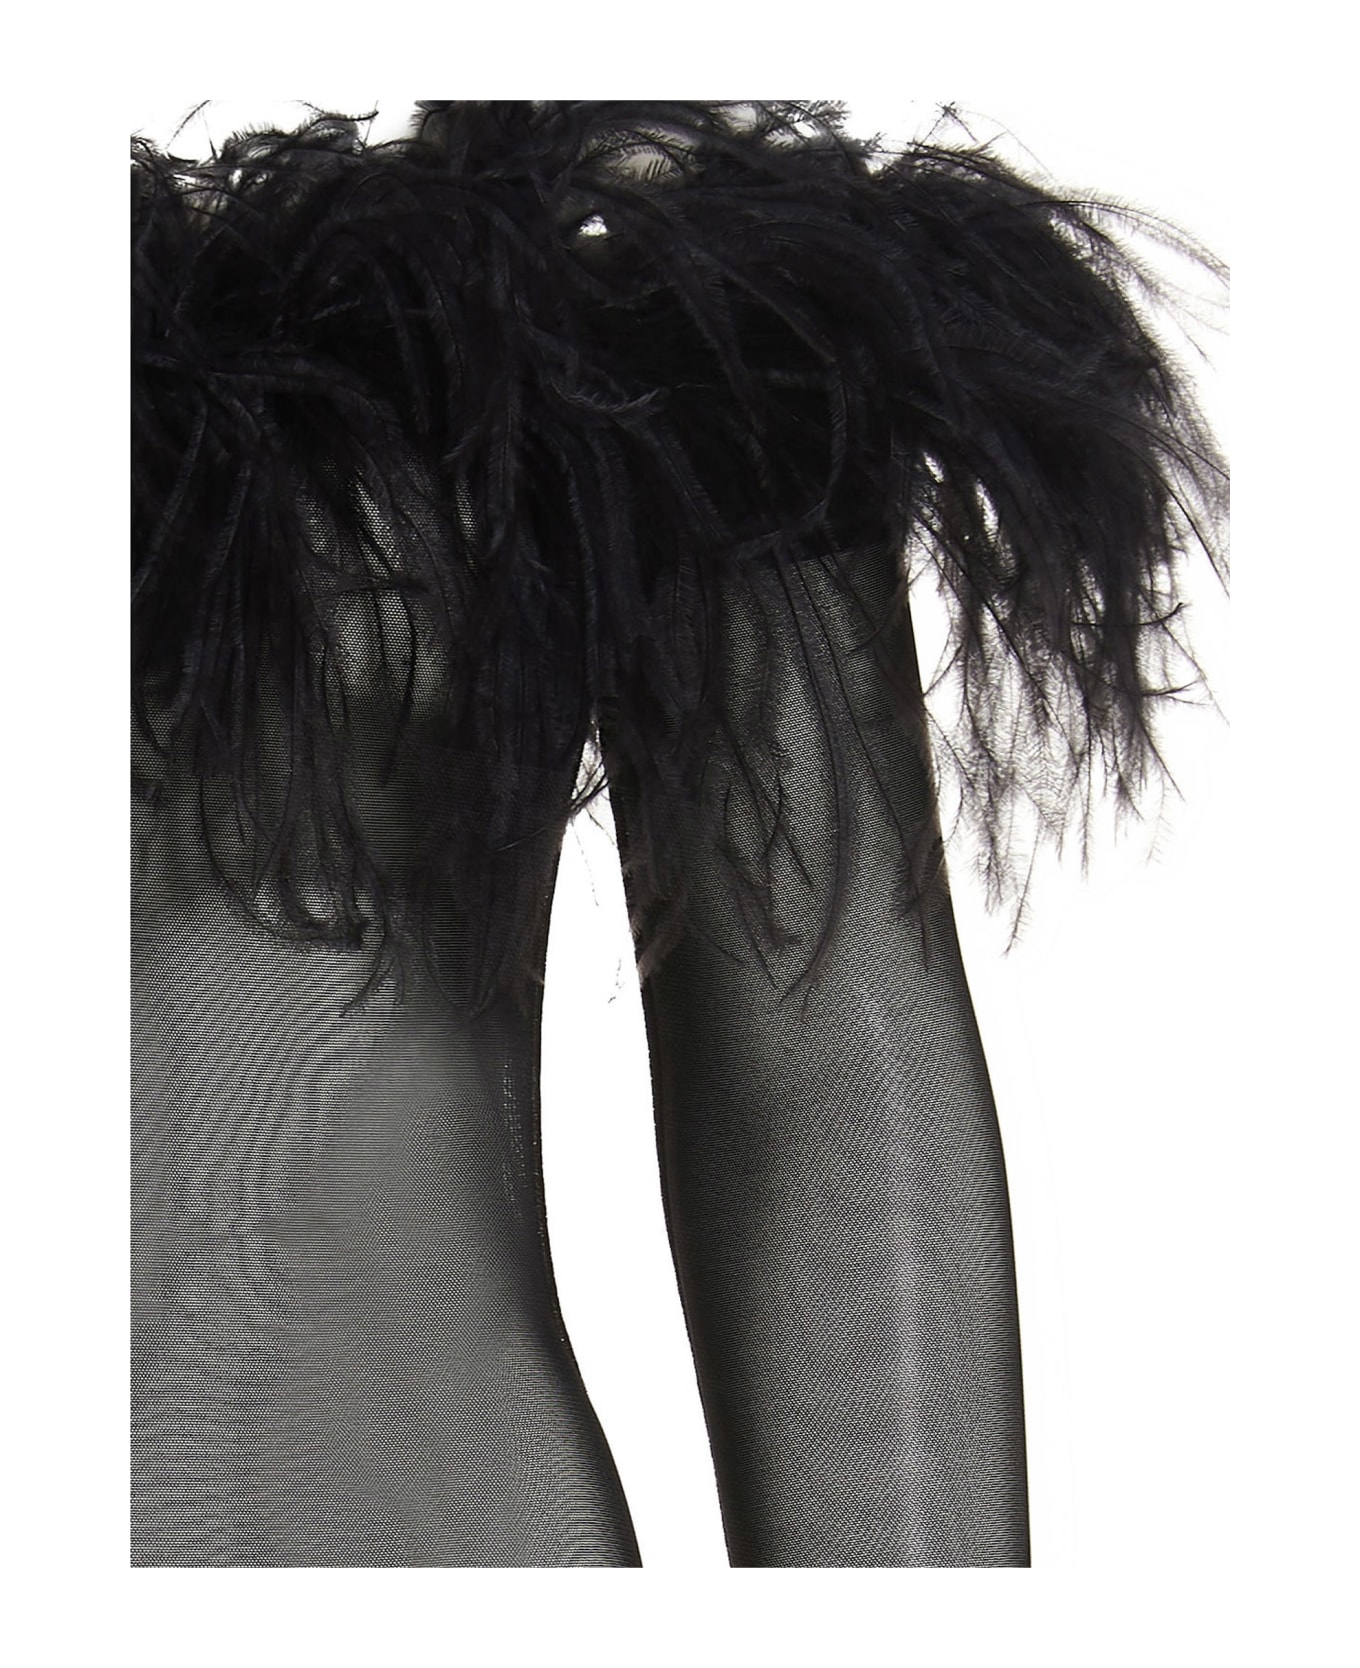 Oseree Feather Entire Mesh Bodysuit - Black ジャンプスーツ